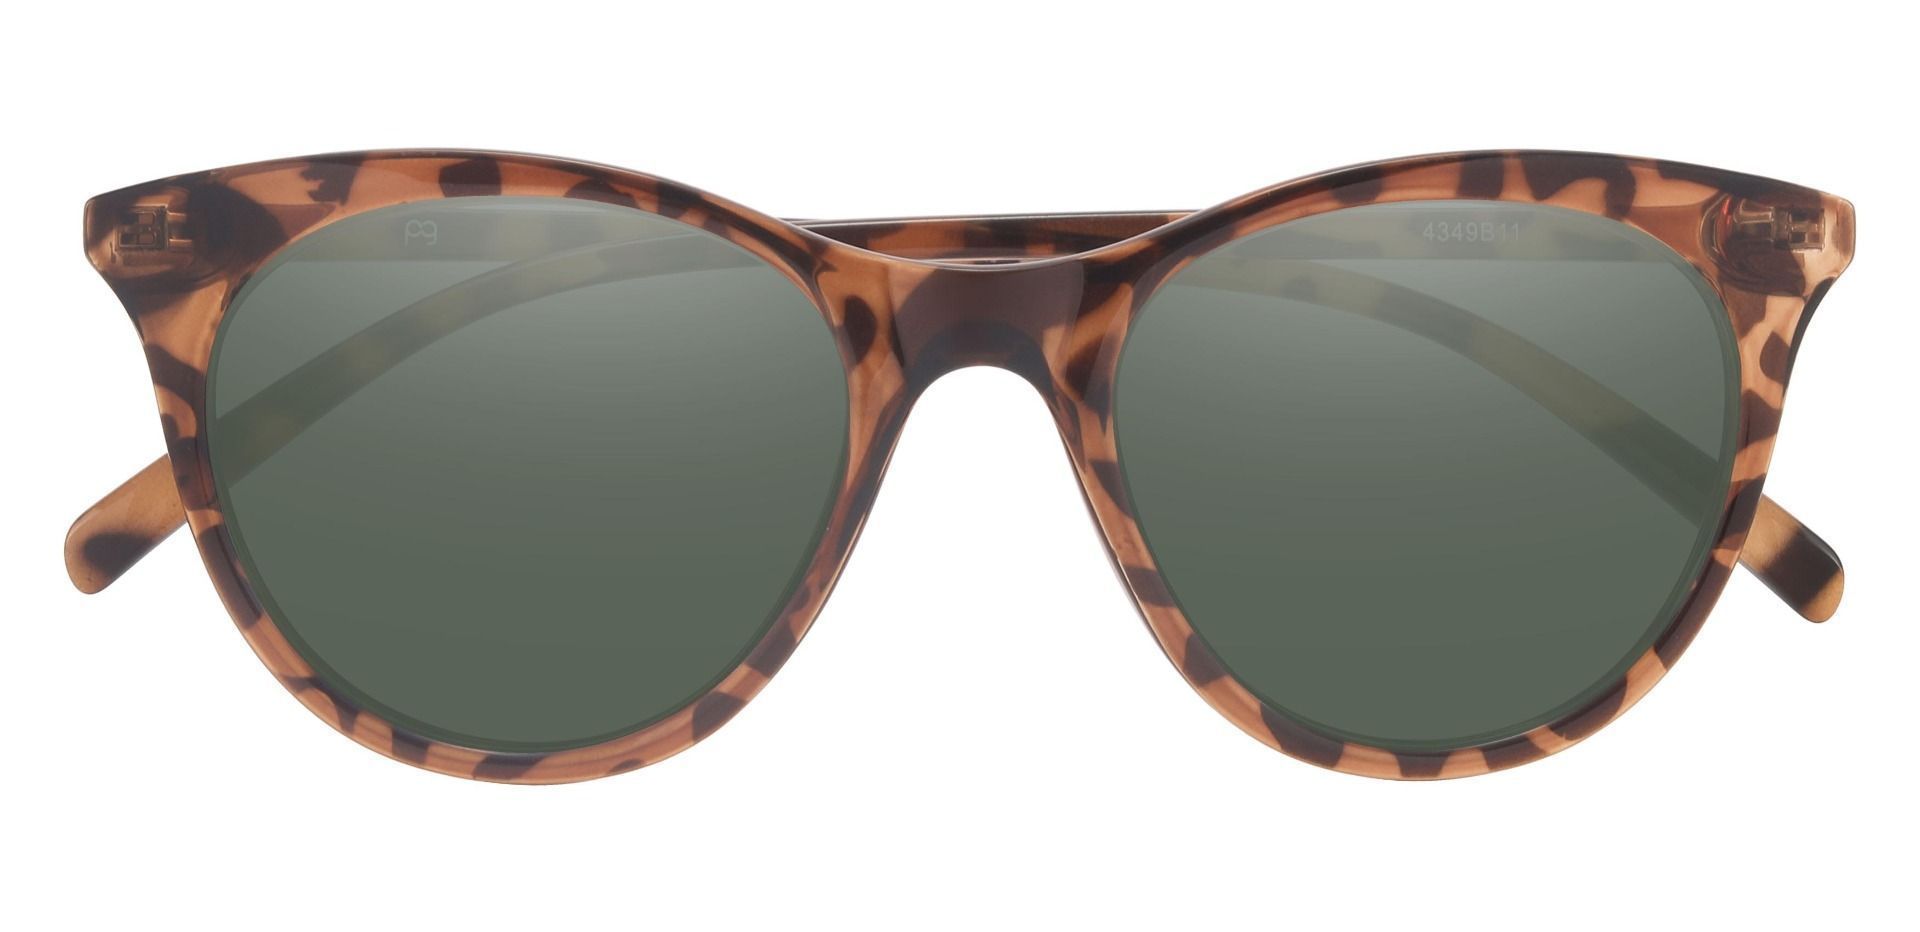 Valencia Cat Eye Prescription Sunglasses - Brown Frame With Green Lenses